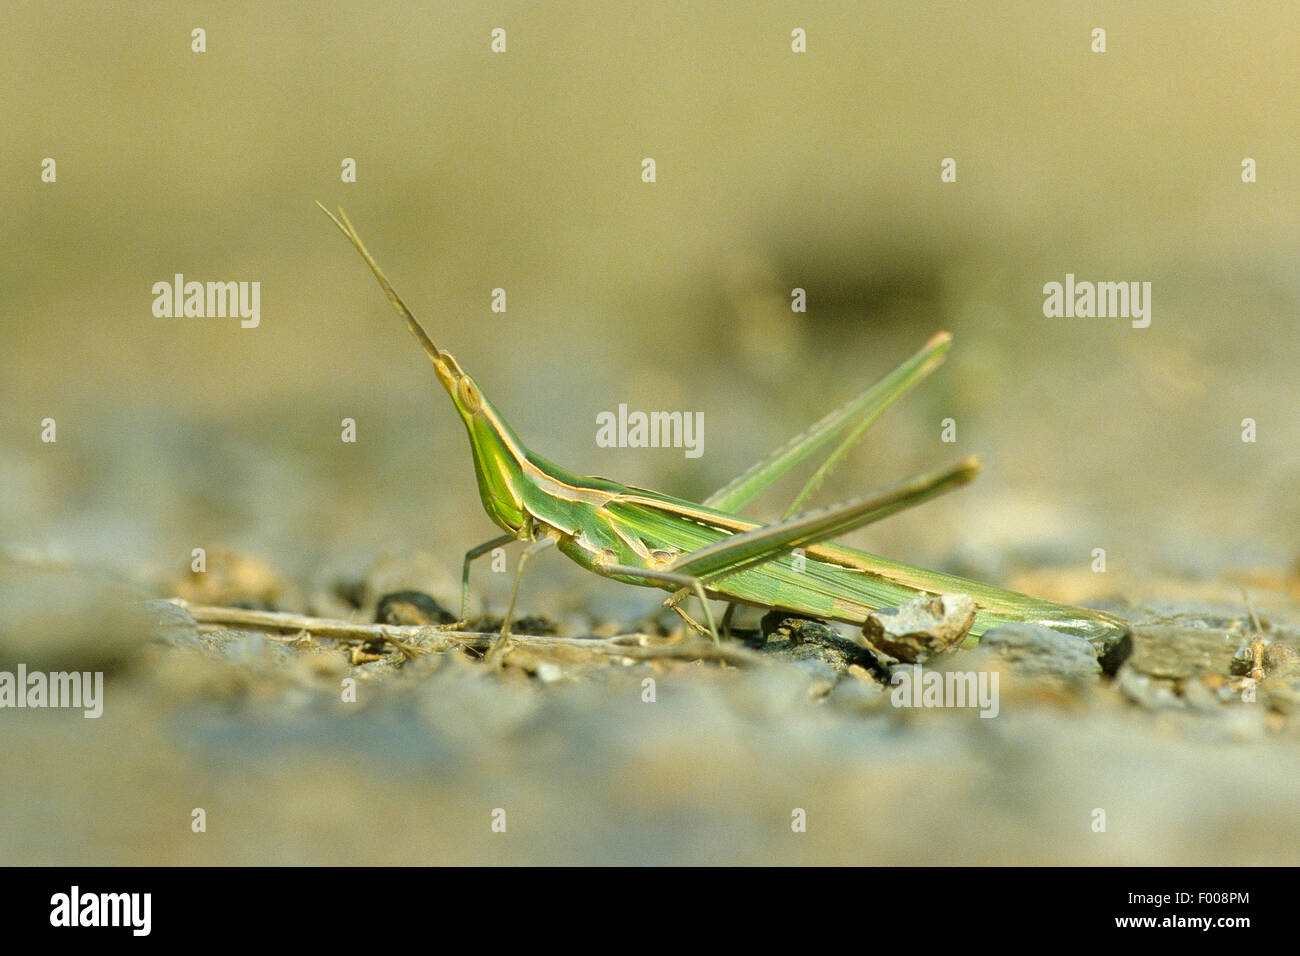 Snouted grasshopper, Long-headed grasshopper, Mediterranean Slant-faced Grasshopper (Acrida hungarica, Acrida ungarica), female, Seitenansicht Stock Photo